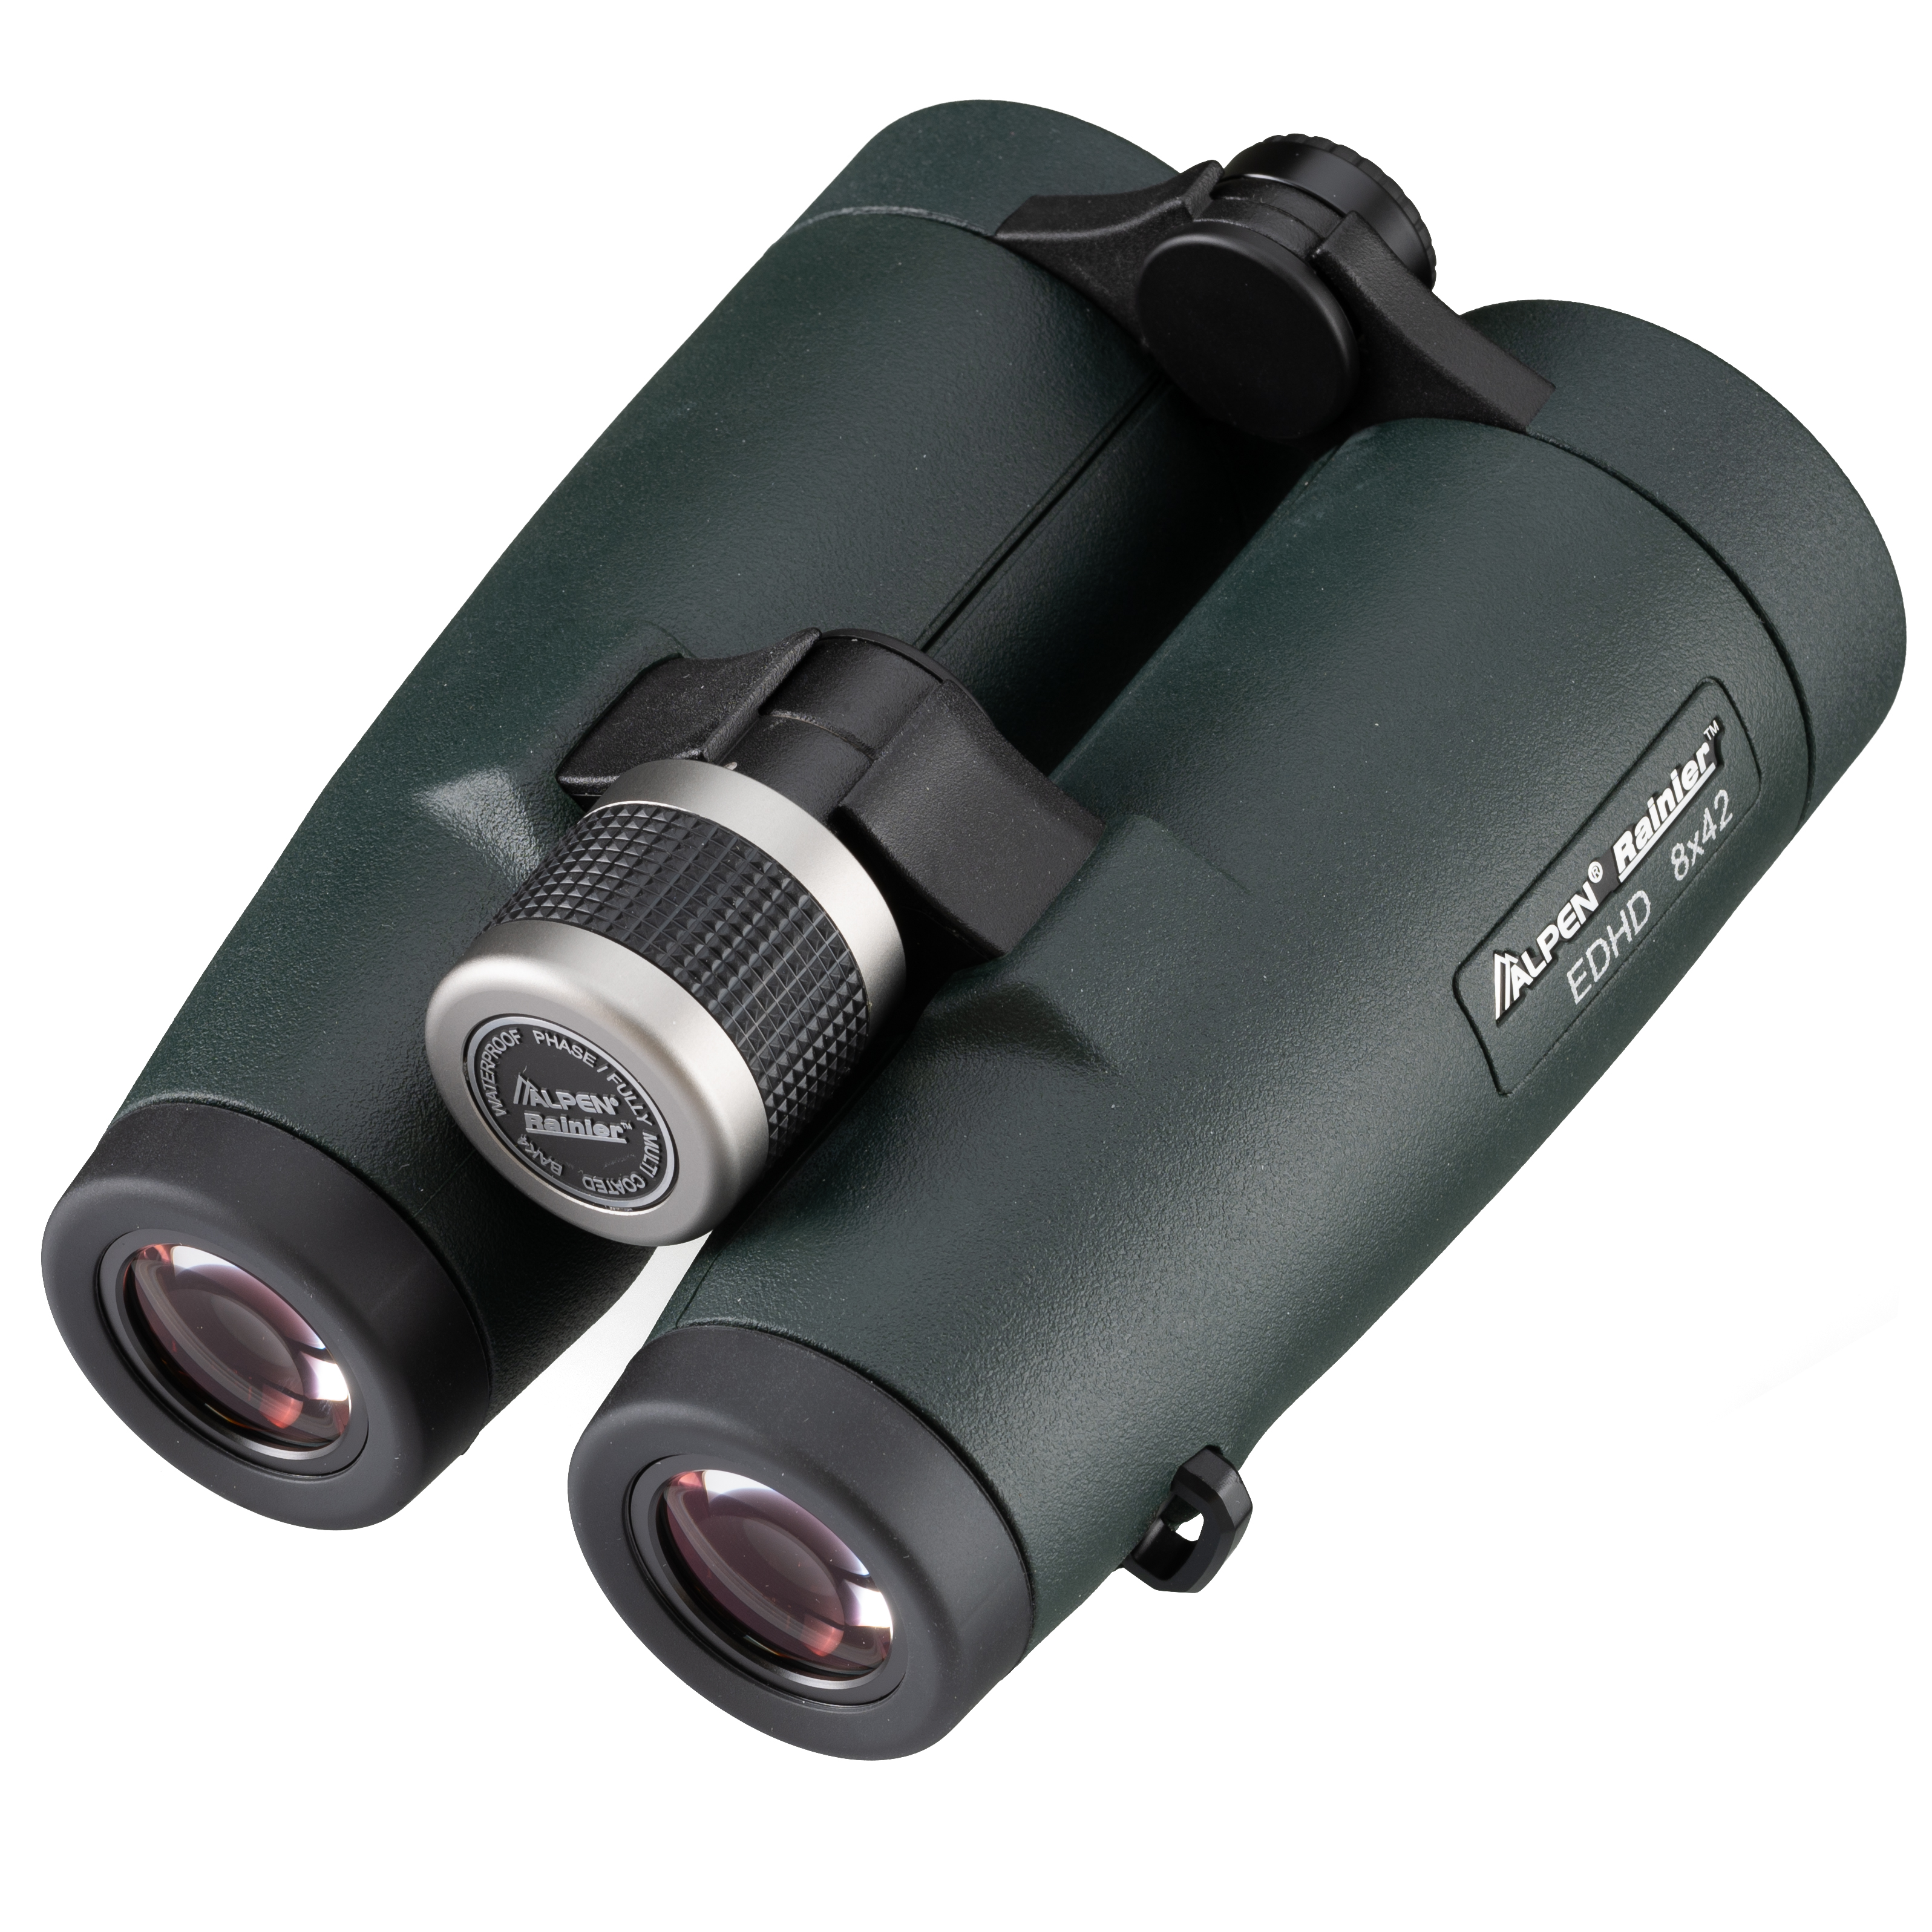 ALPEN OPTICS Rainier 8x42 HD binoculars with ED glass and magnesium housing (Refurbished)